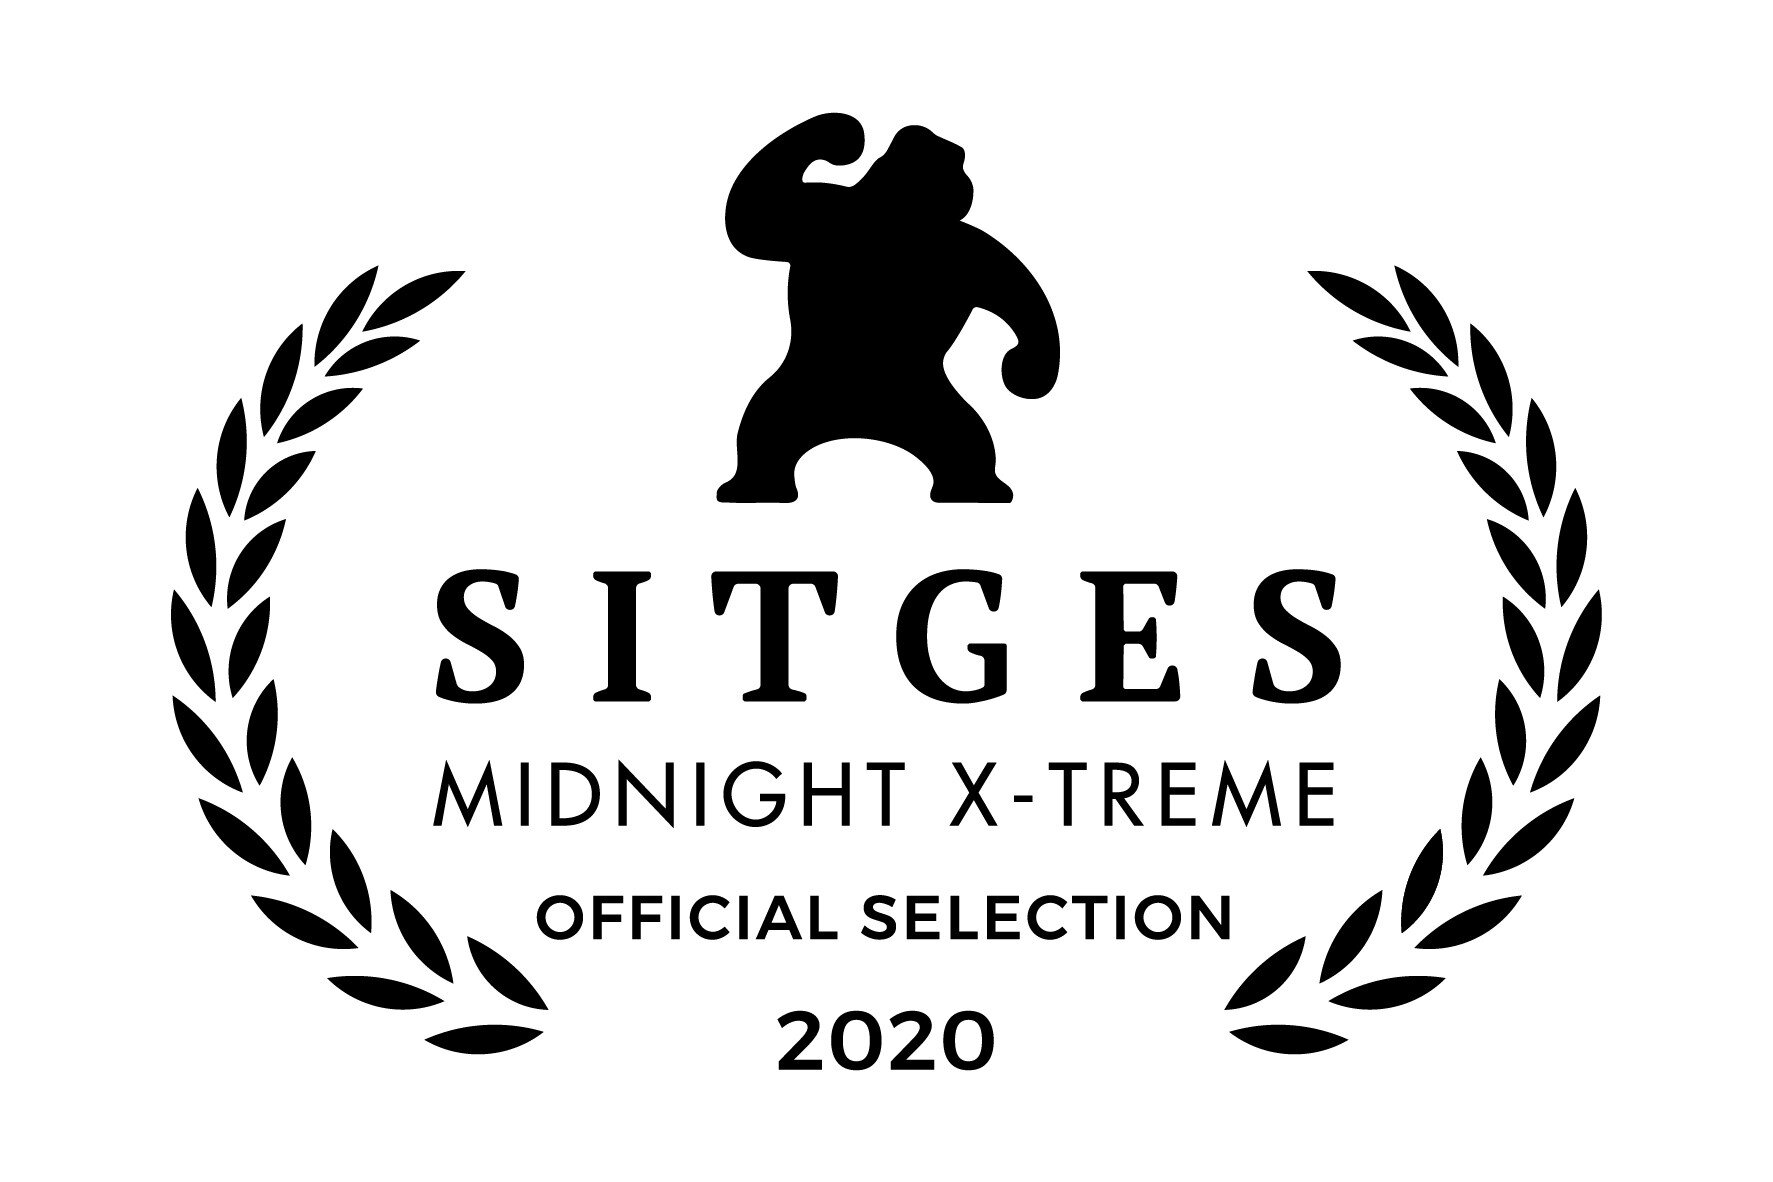 Sitges_midnight_extreme.jpg